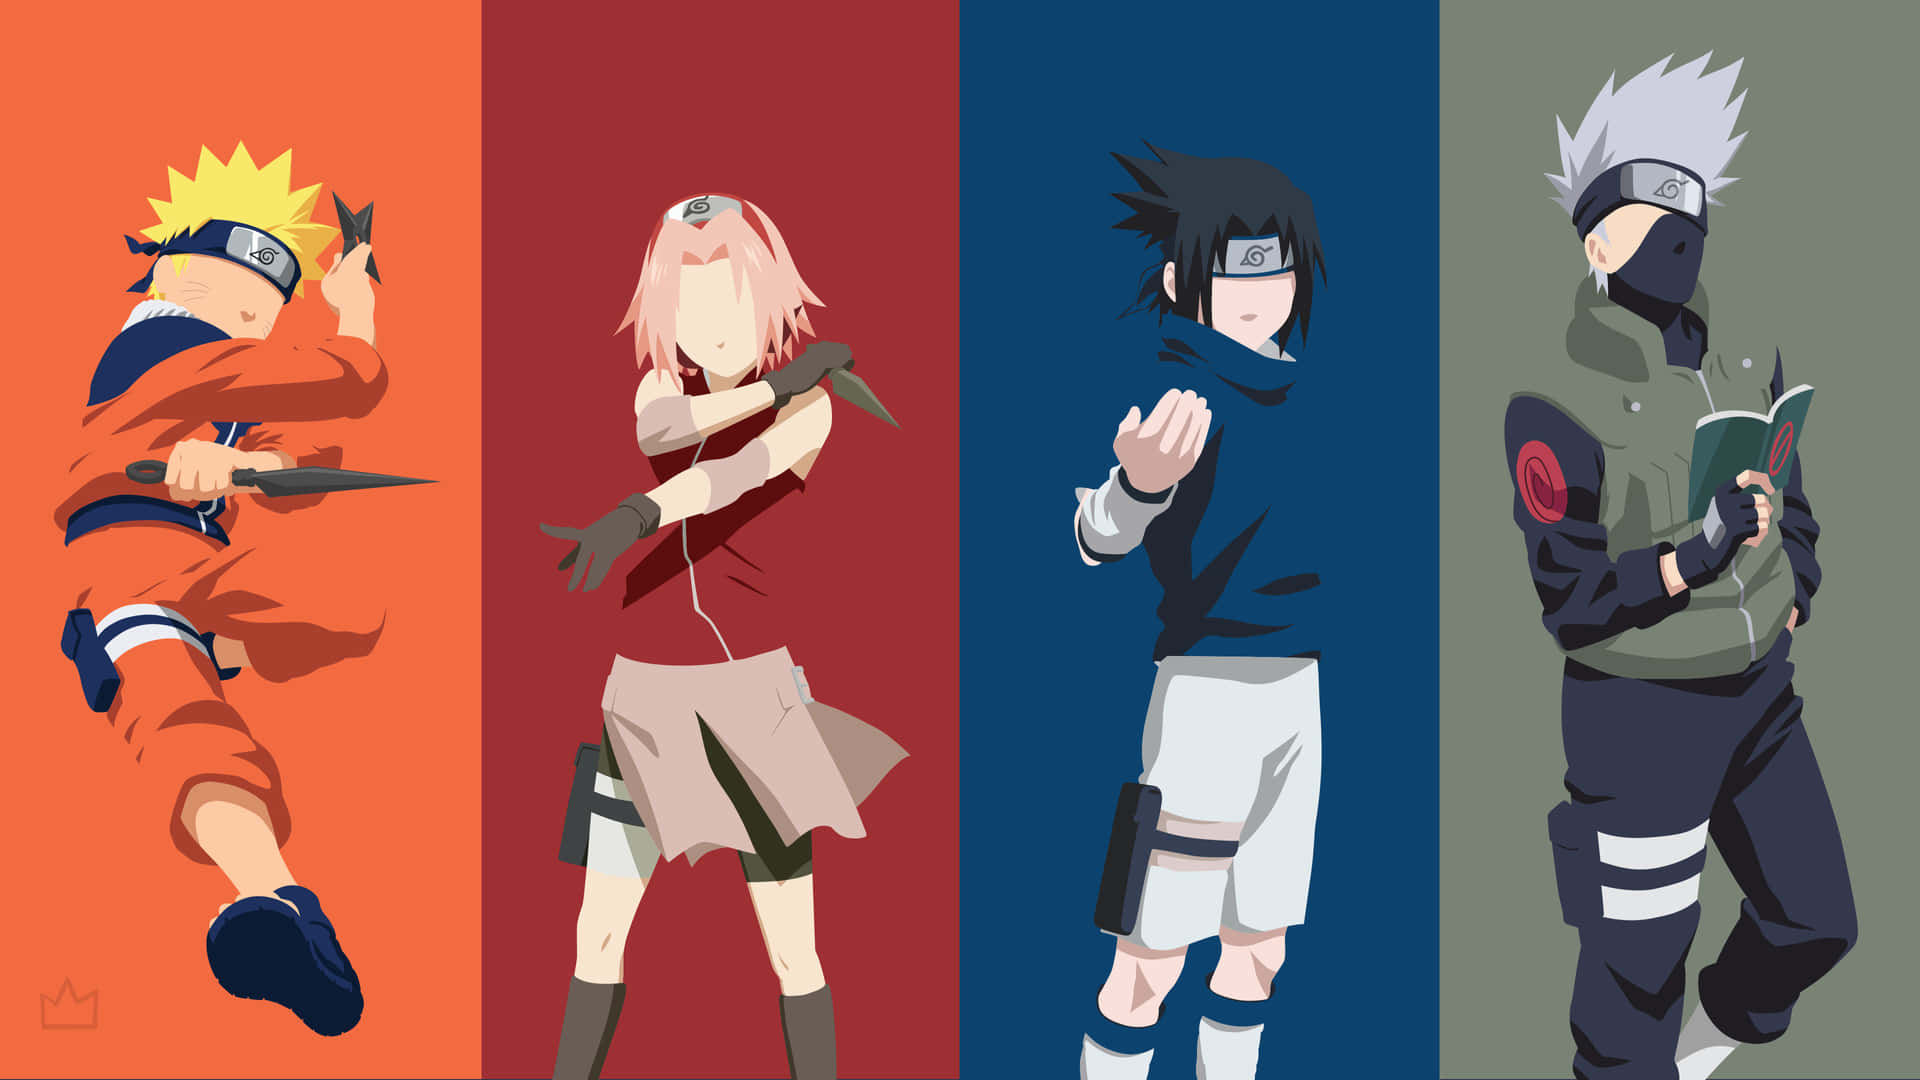 Free Team 7 Naruto Wallpaper Downloads, [100+] Team 7 Naruto Wallpapers for  FREE 